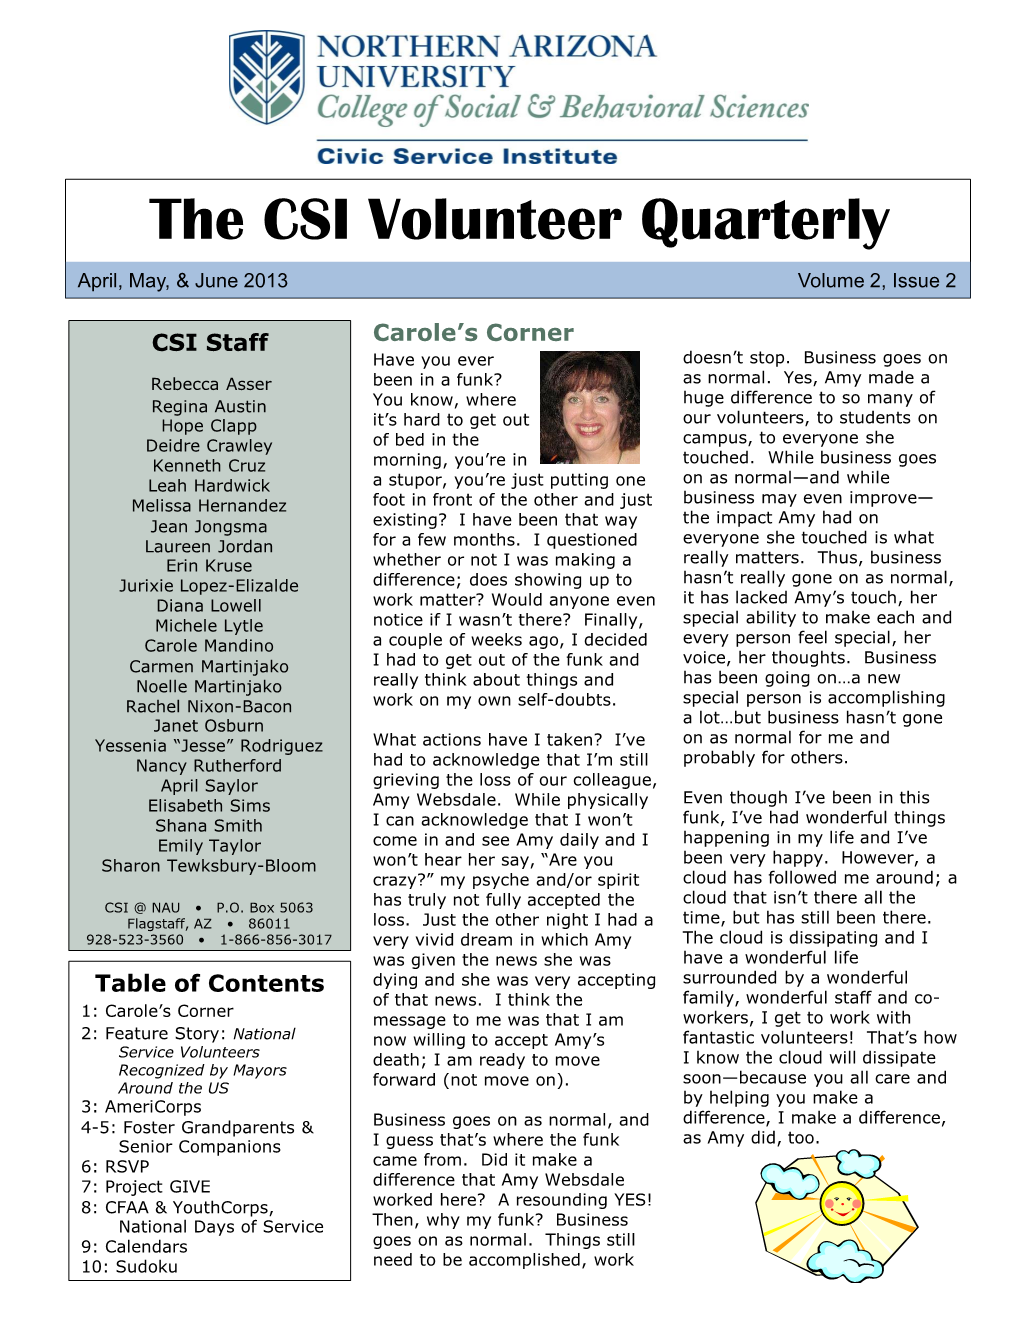 The CSI Volunteer Quarterly April, May, & June 2013 Volume 2, Issue 2